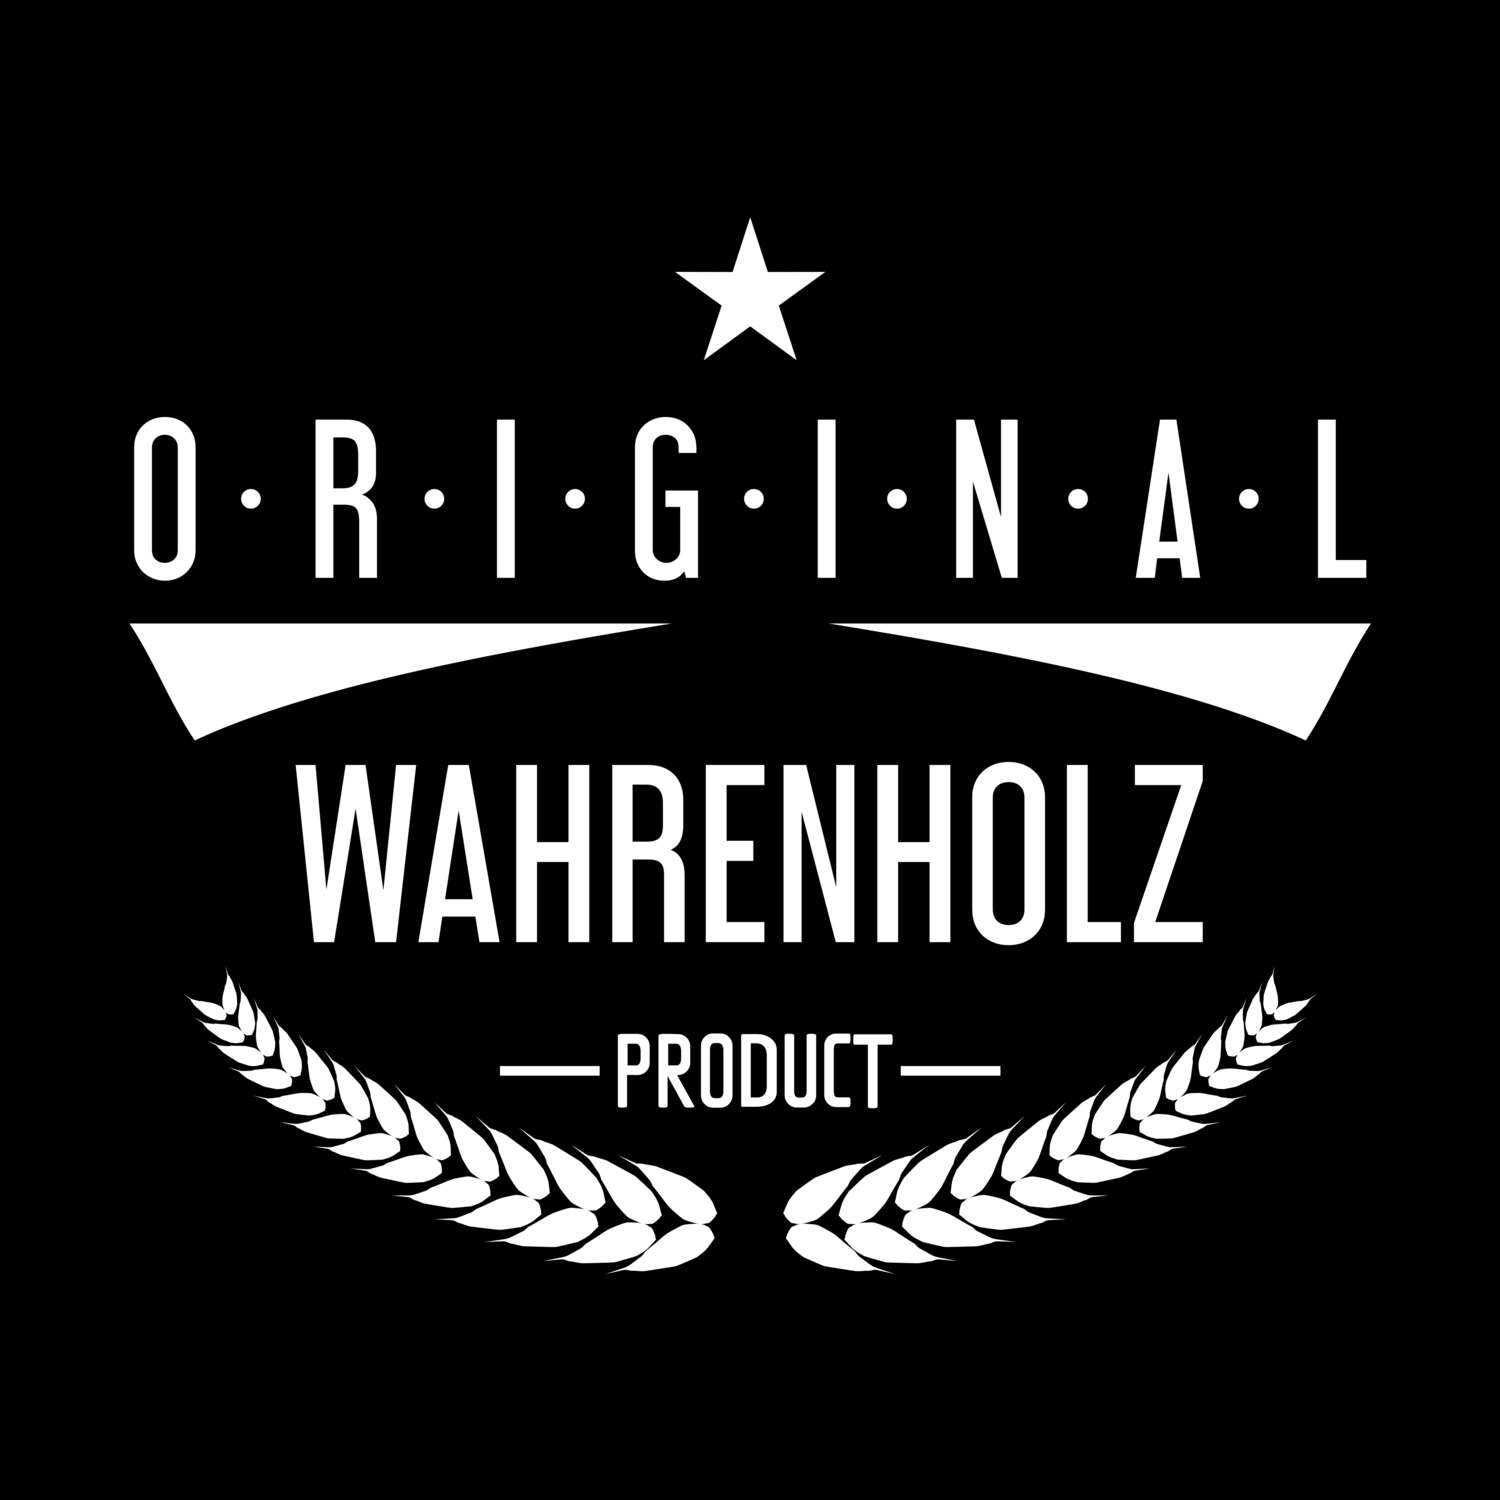 Wahrenholz T-Shirt »Original Product«